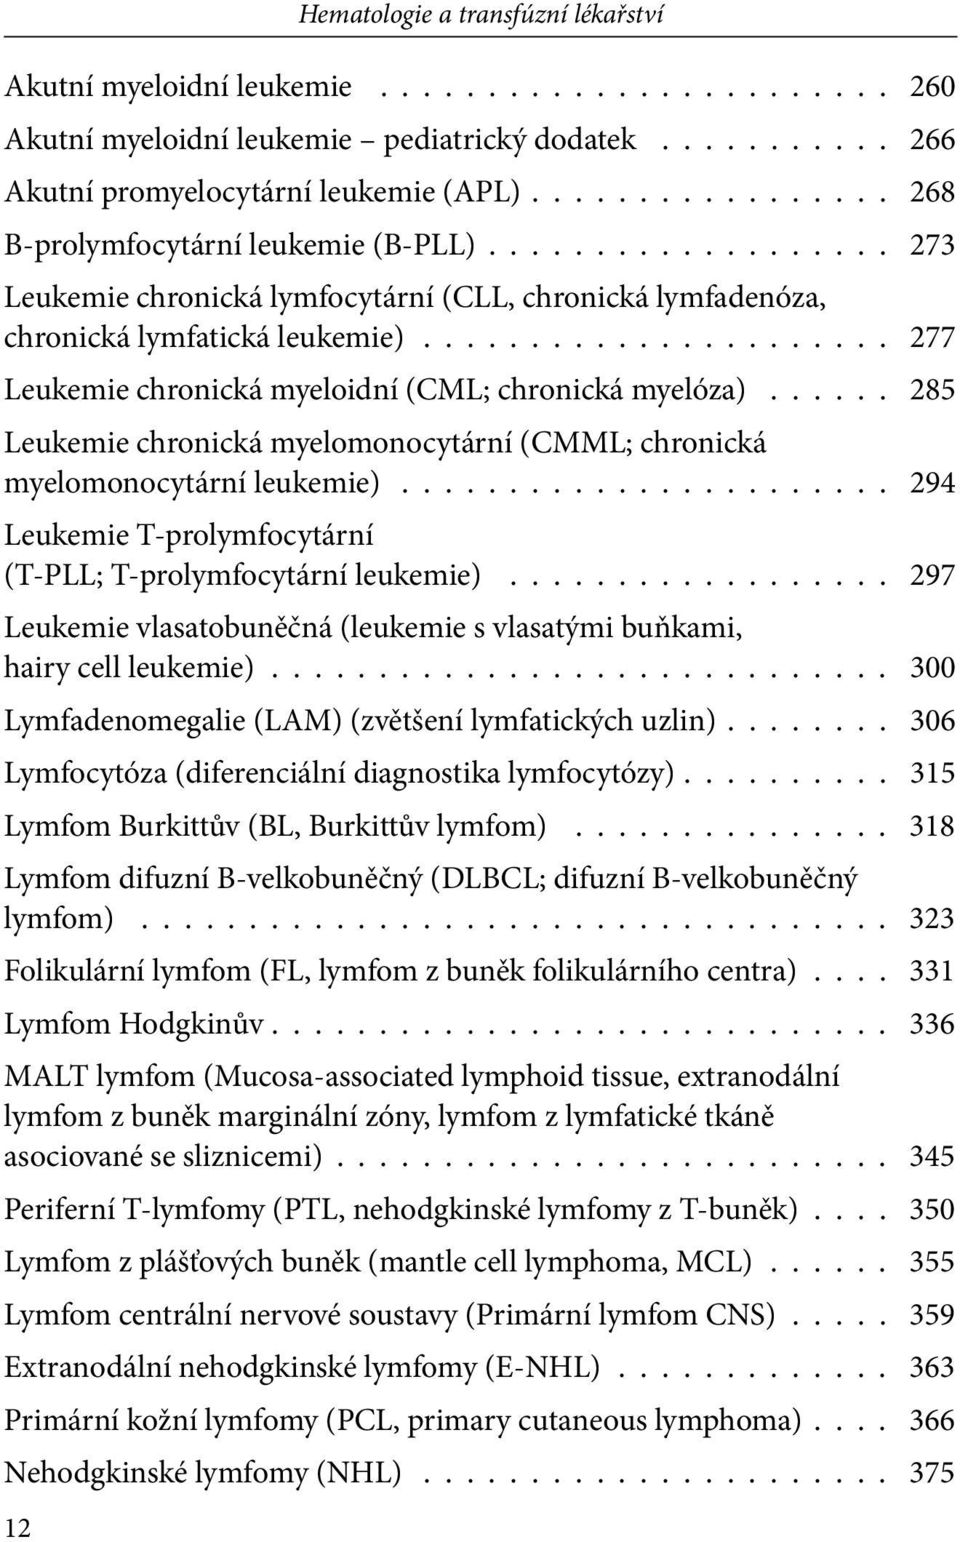 chronická myelomonocytární leukemie) 294 Leukemie T-prolymfocytární (T-PLL; T-prolymfocytární leukemie) 297 Leukemie vlasatobuněčná (leukemie s vlasatými buňkami, hairy cell leukemie) 300